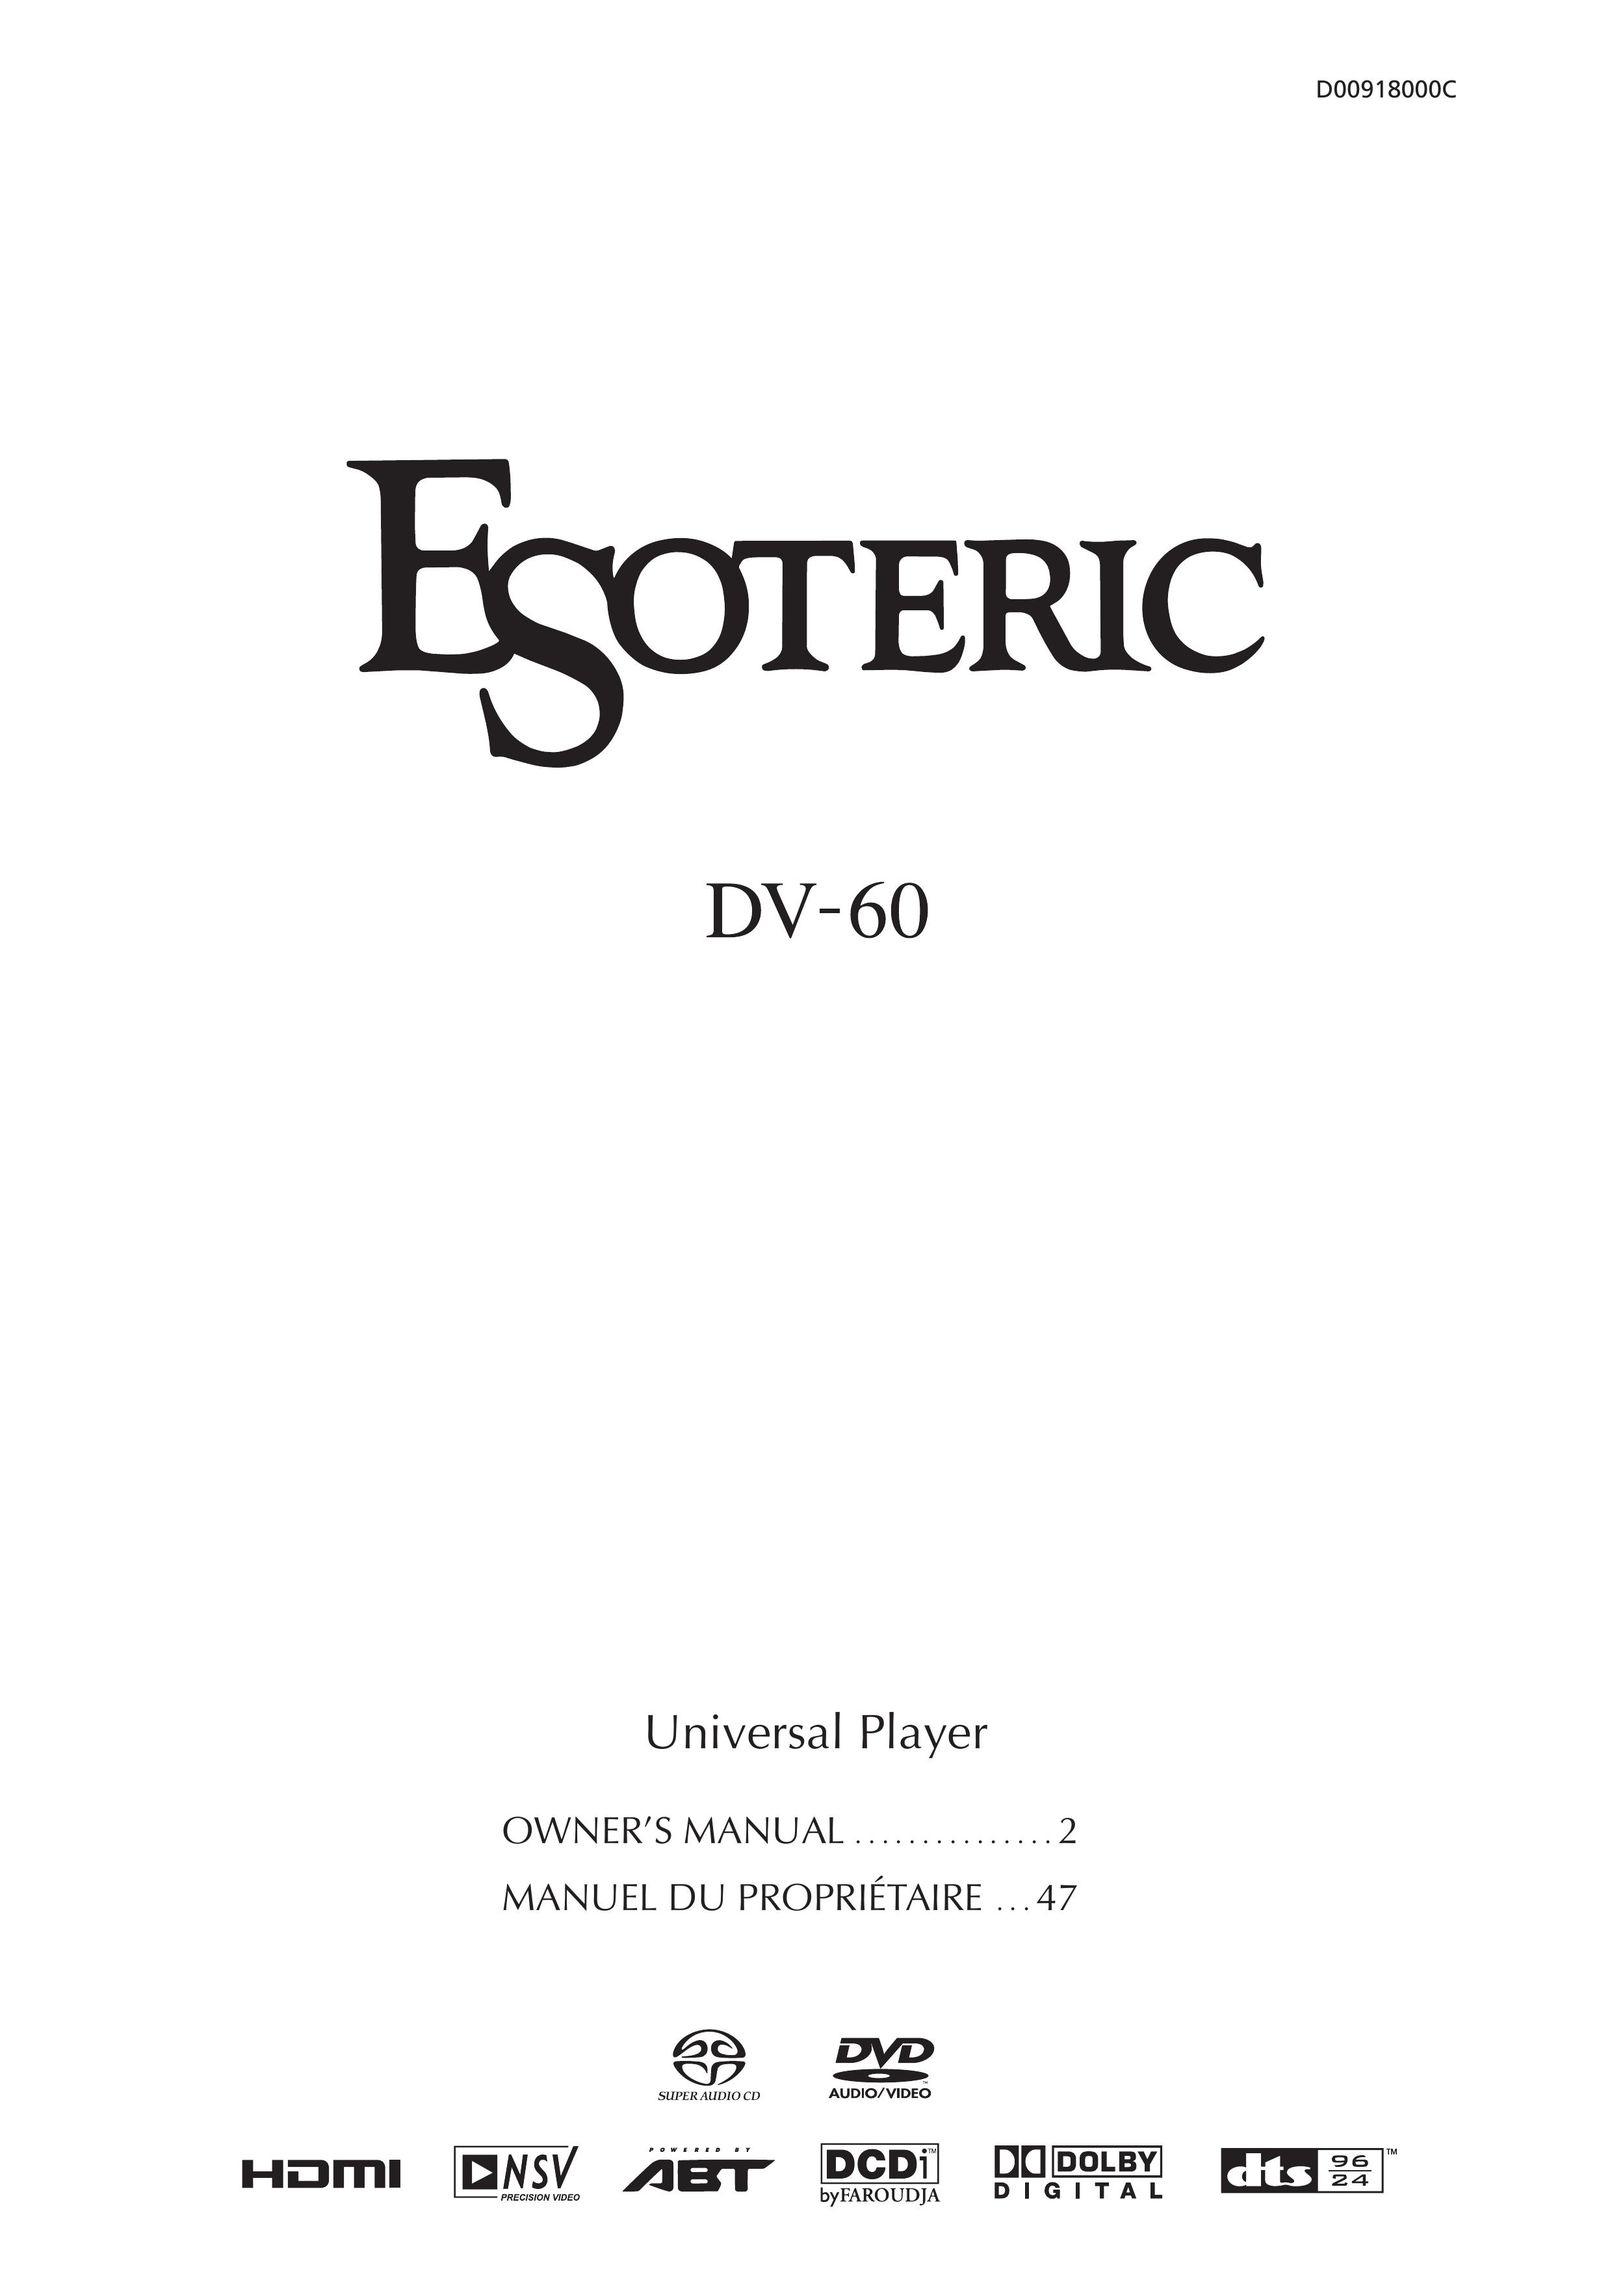 Esoteric DV-60 DVD Player User Manual